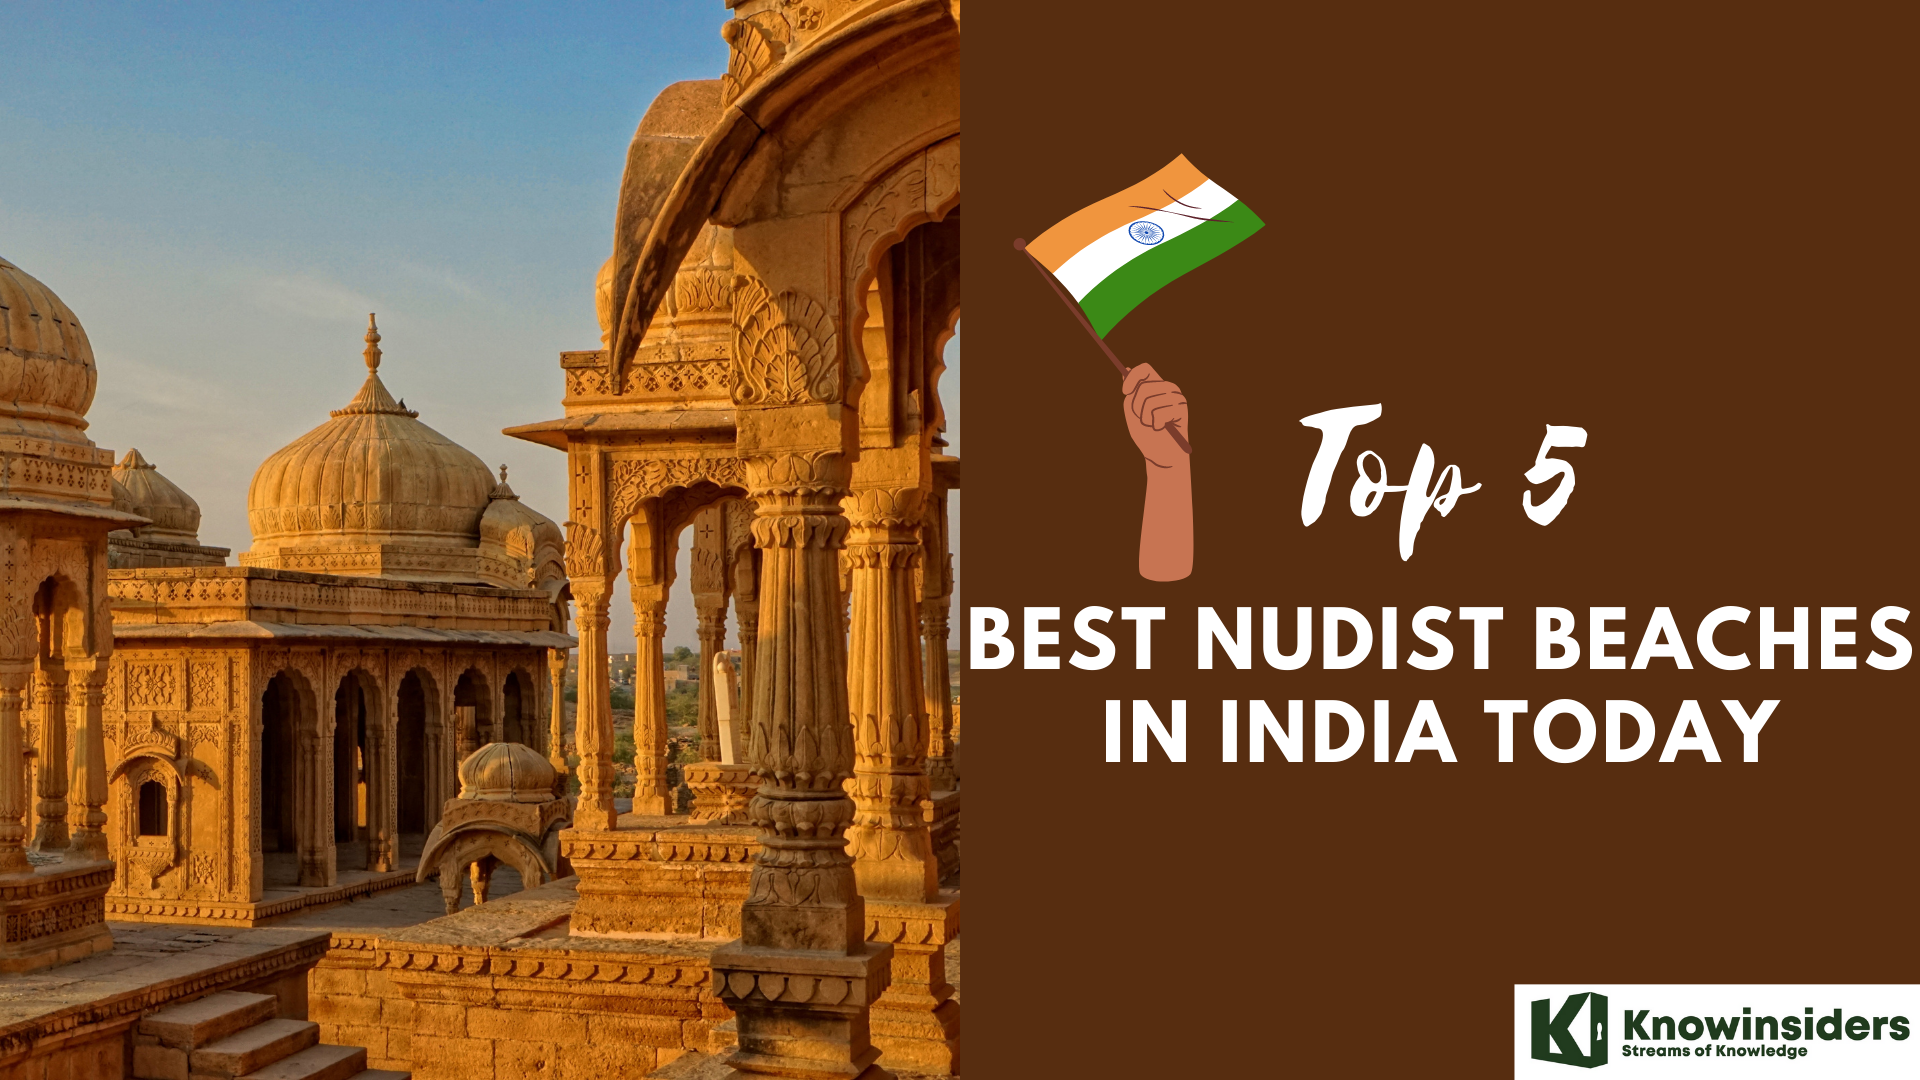 Top 5 Best Nudist Beaches in India Today